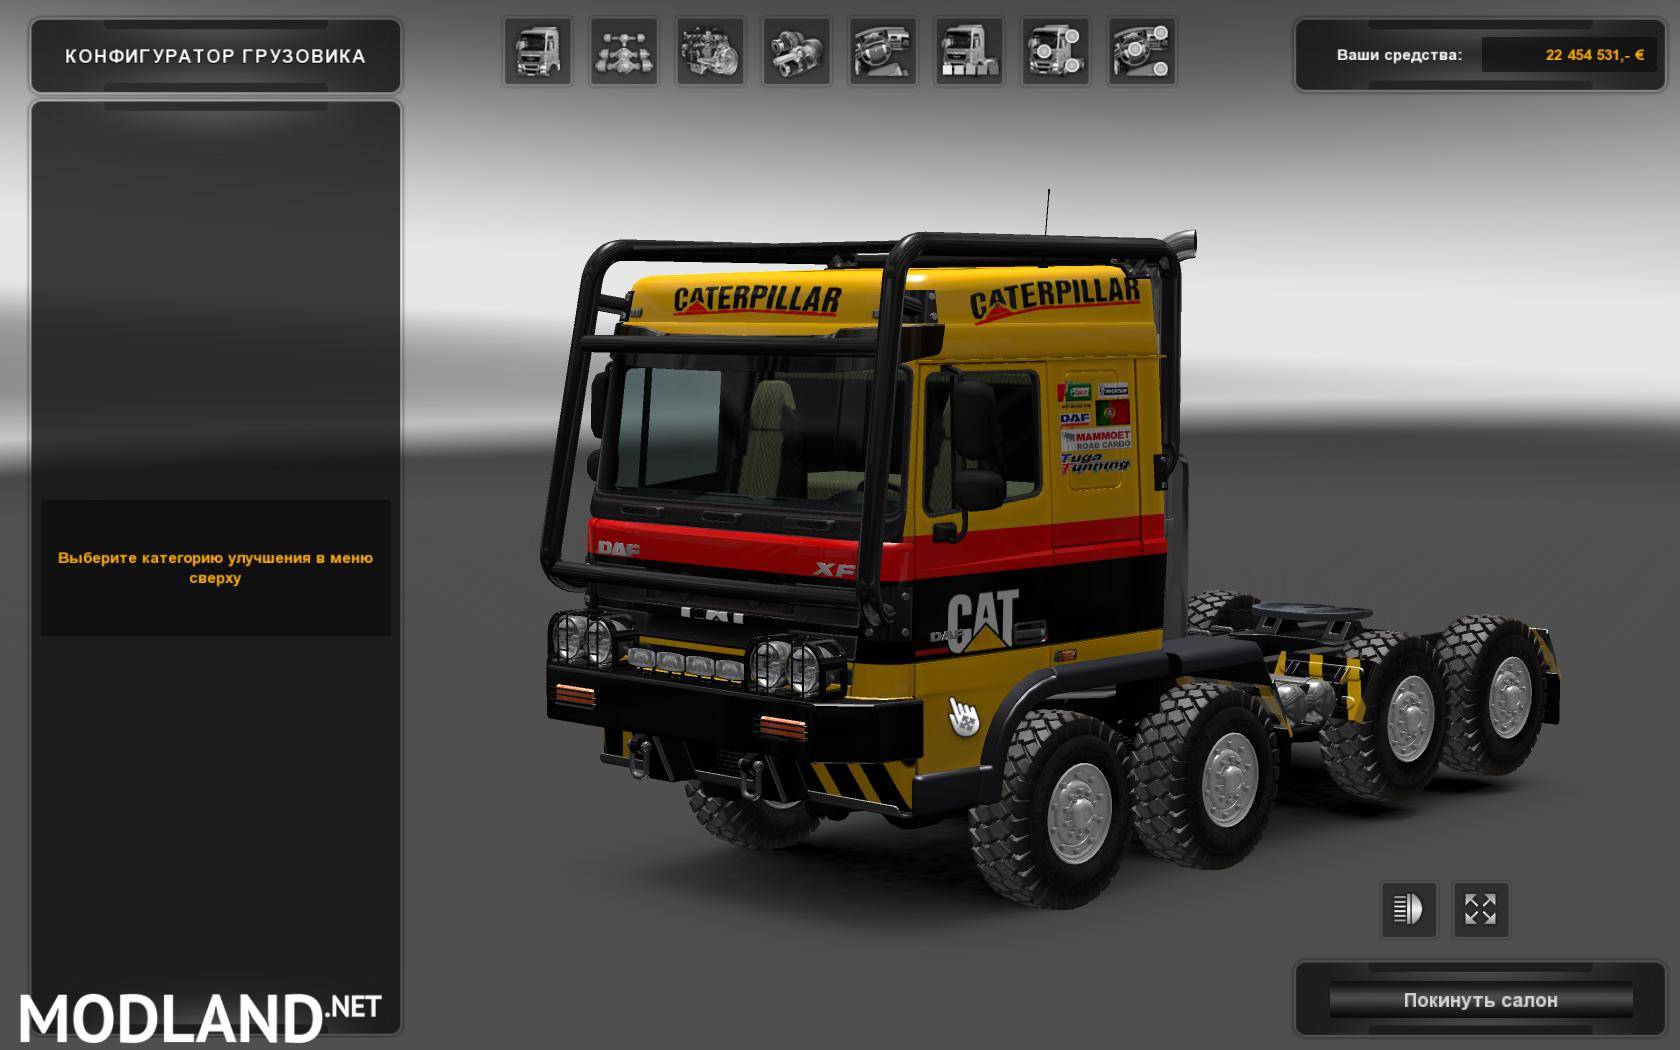 Euro truck simulator 2 free full version